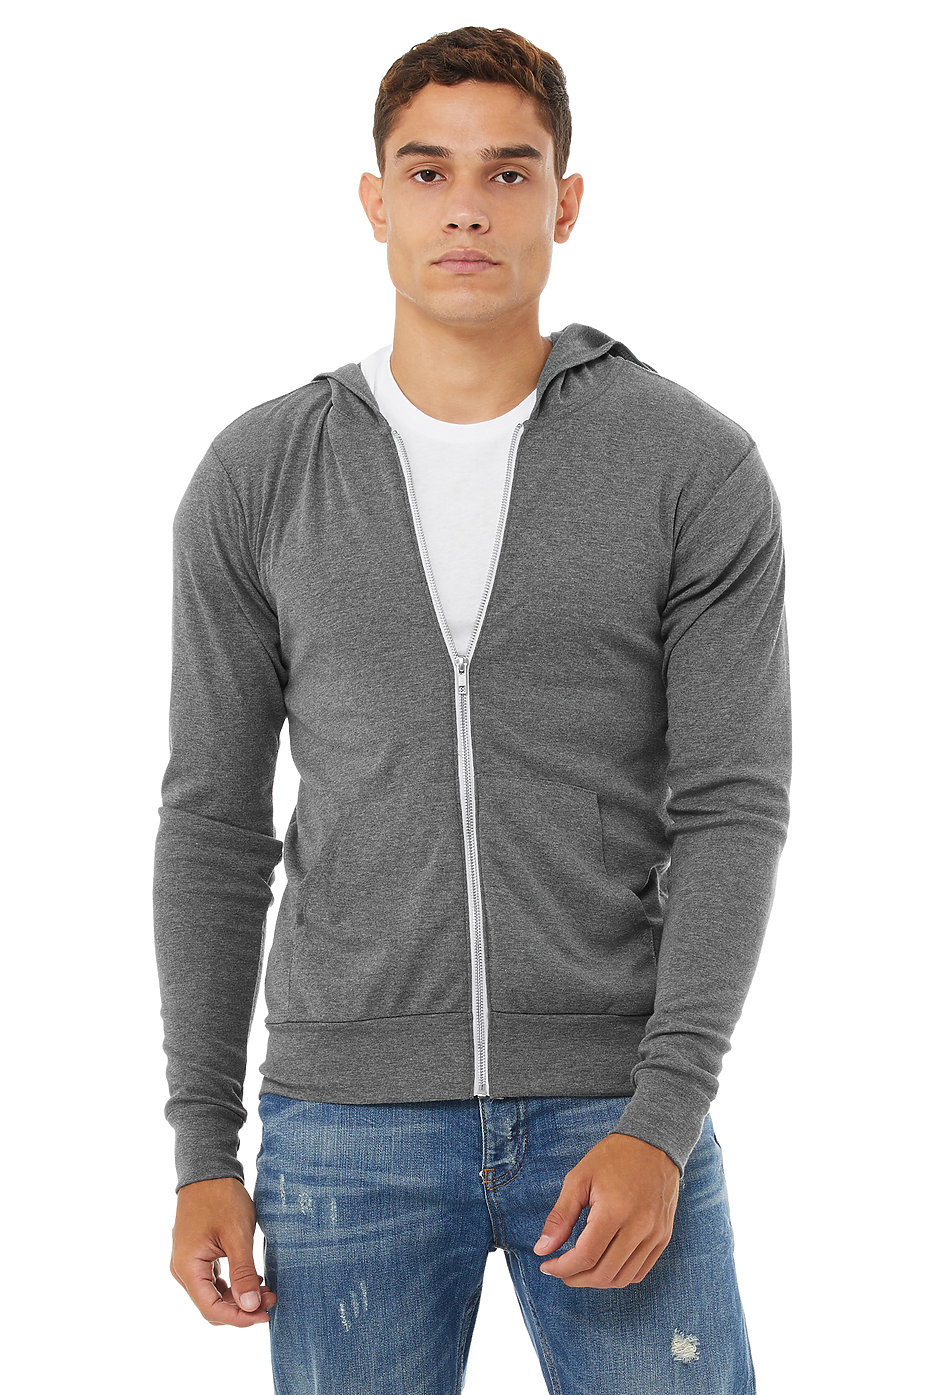 Slim Fit Lightweight Long Sleeve Zip up Hoodie Unisex Hooded Fleece Sweatshirt 